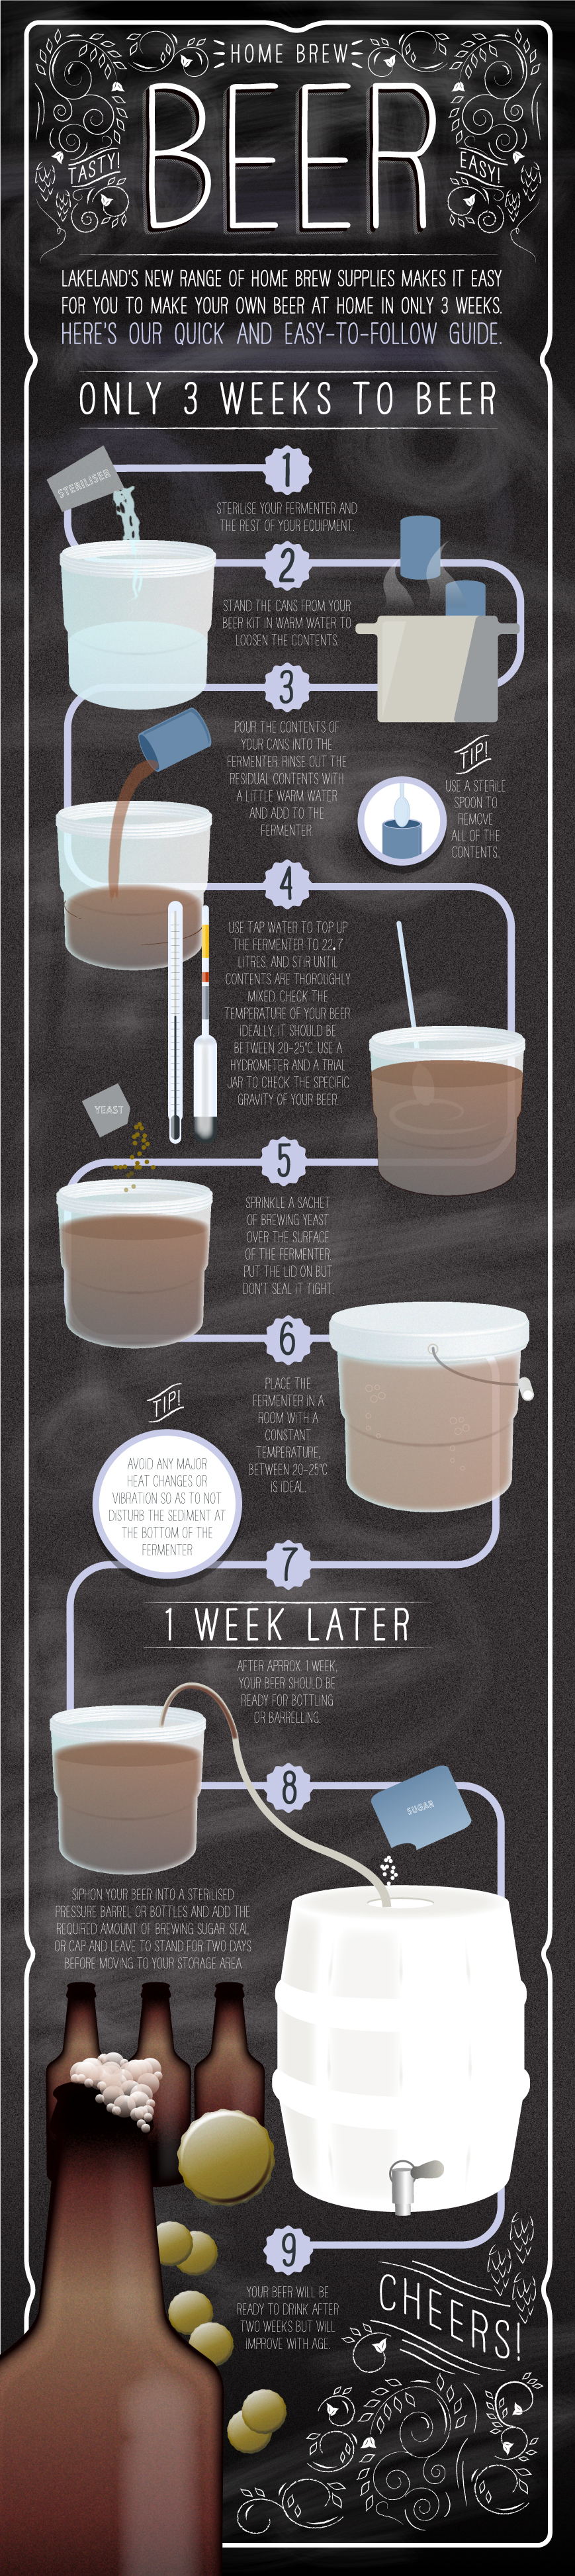 homebrew_beer_infographic